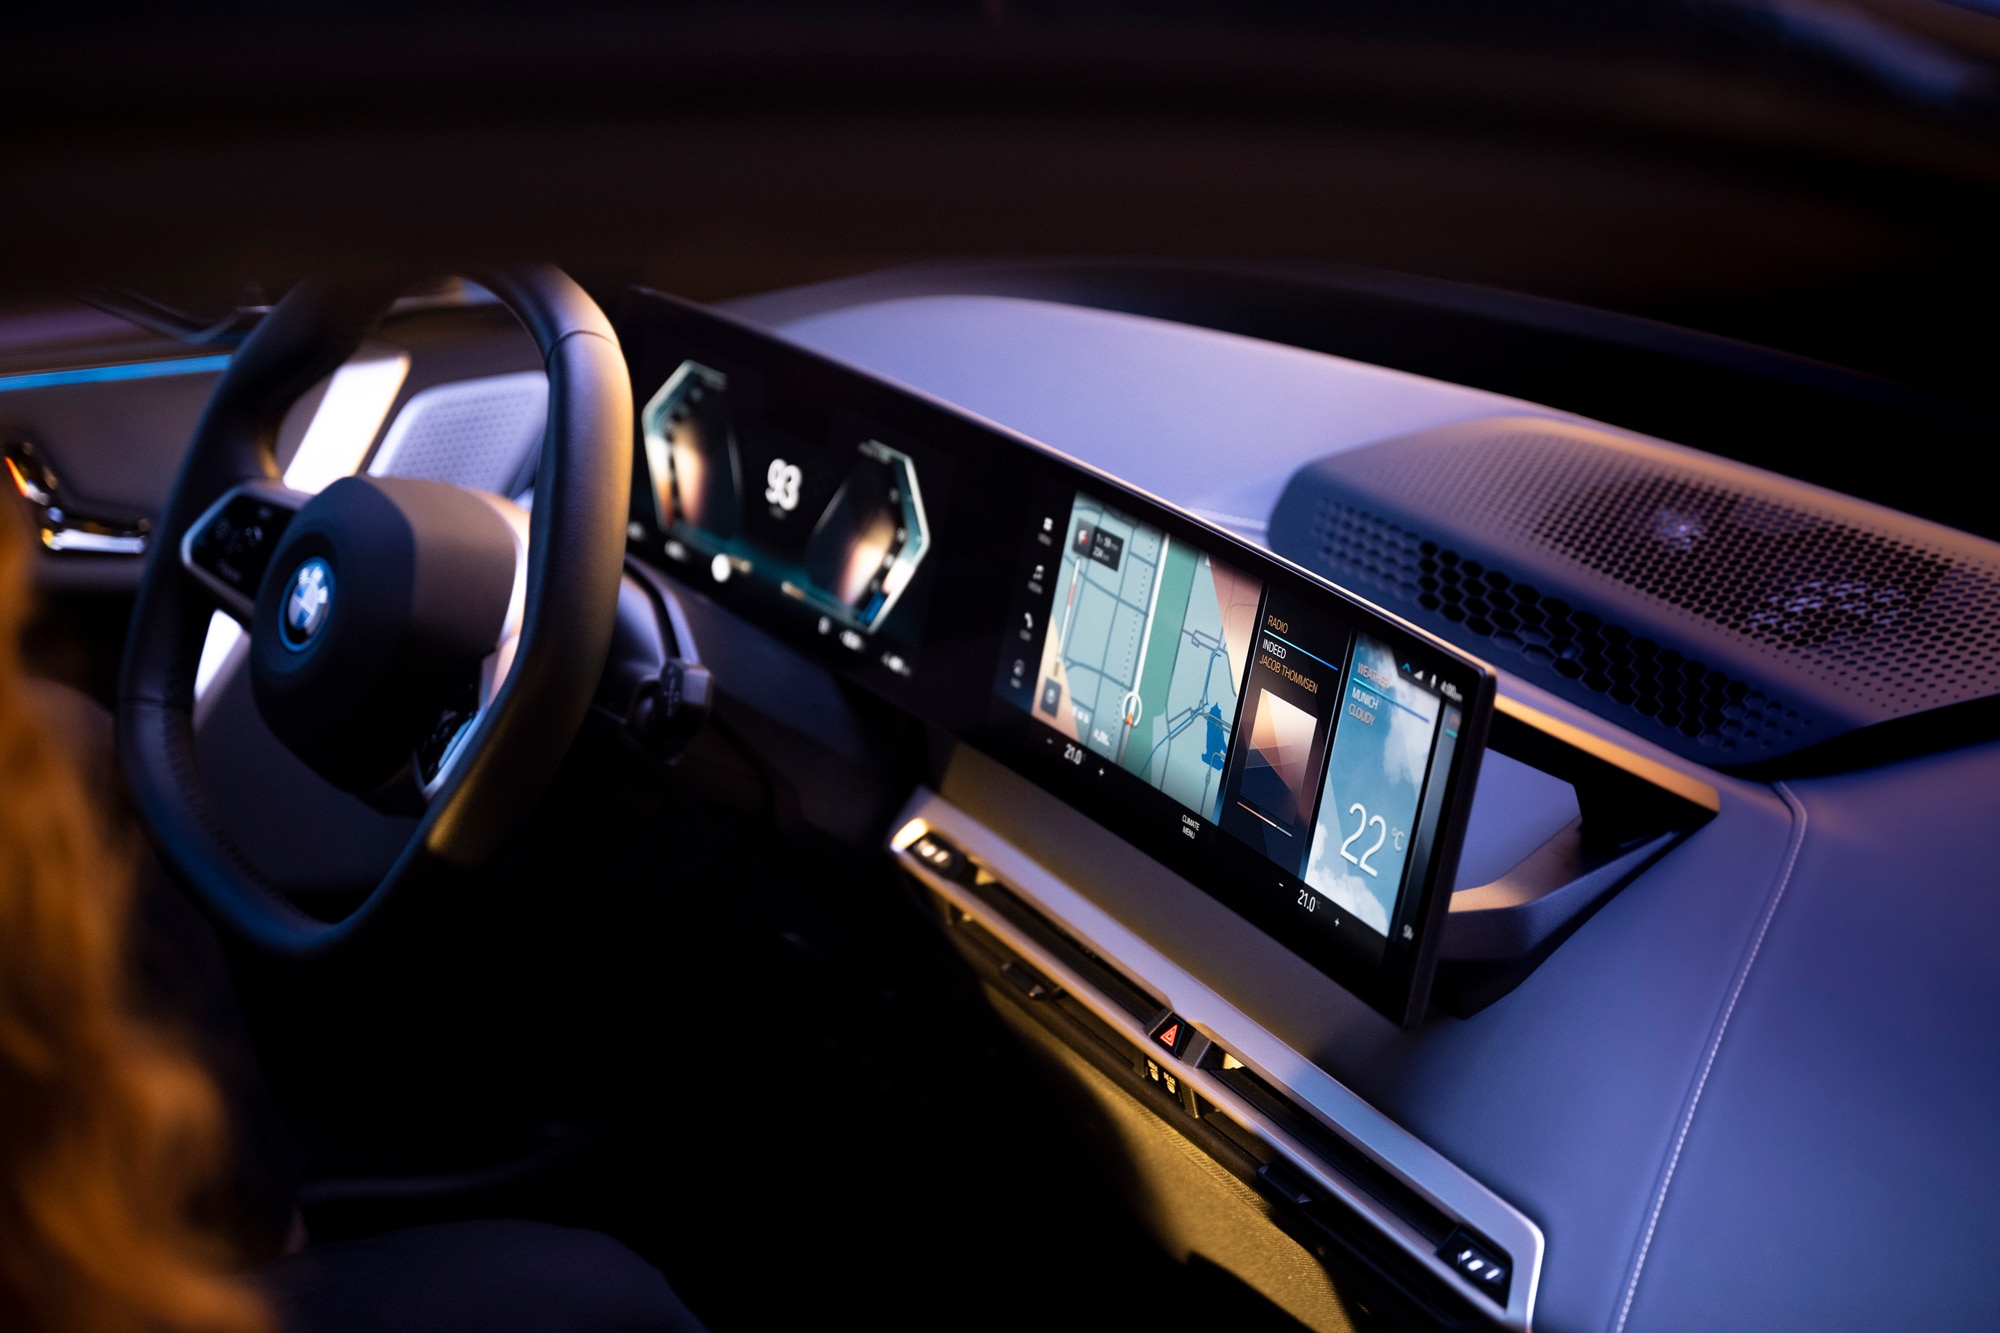 BMW dashboard displaying BMW iDrive and infotainment system